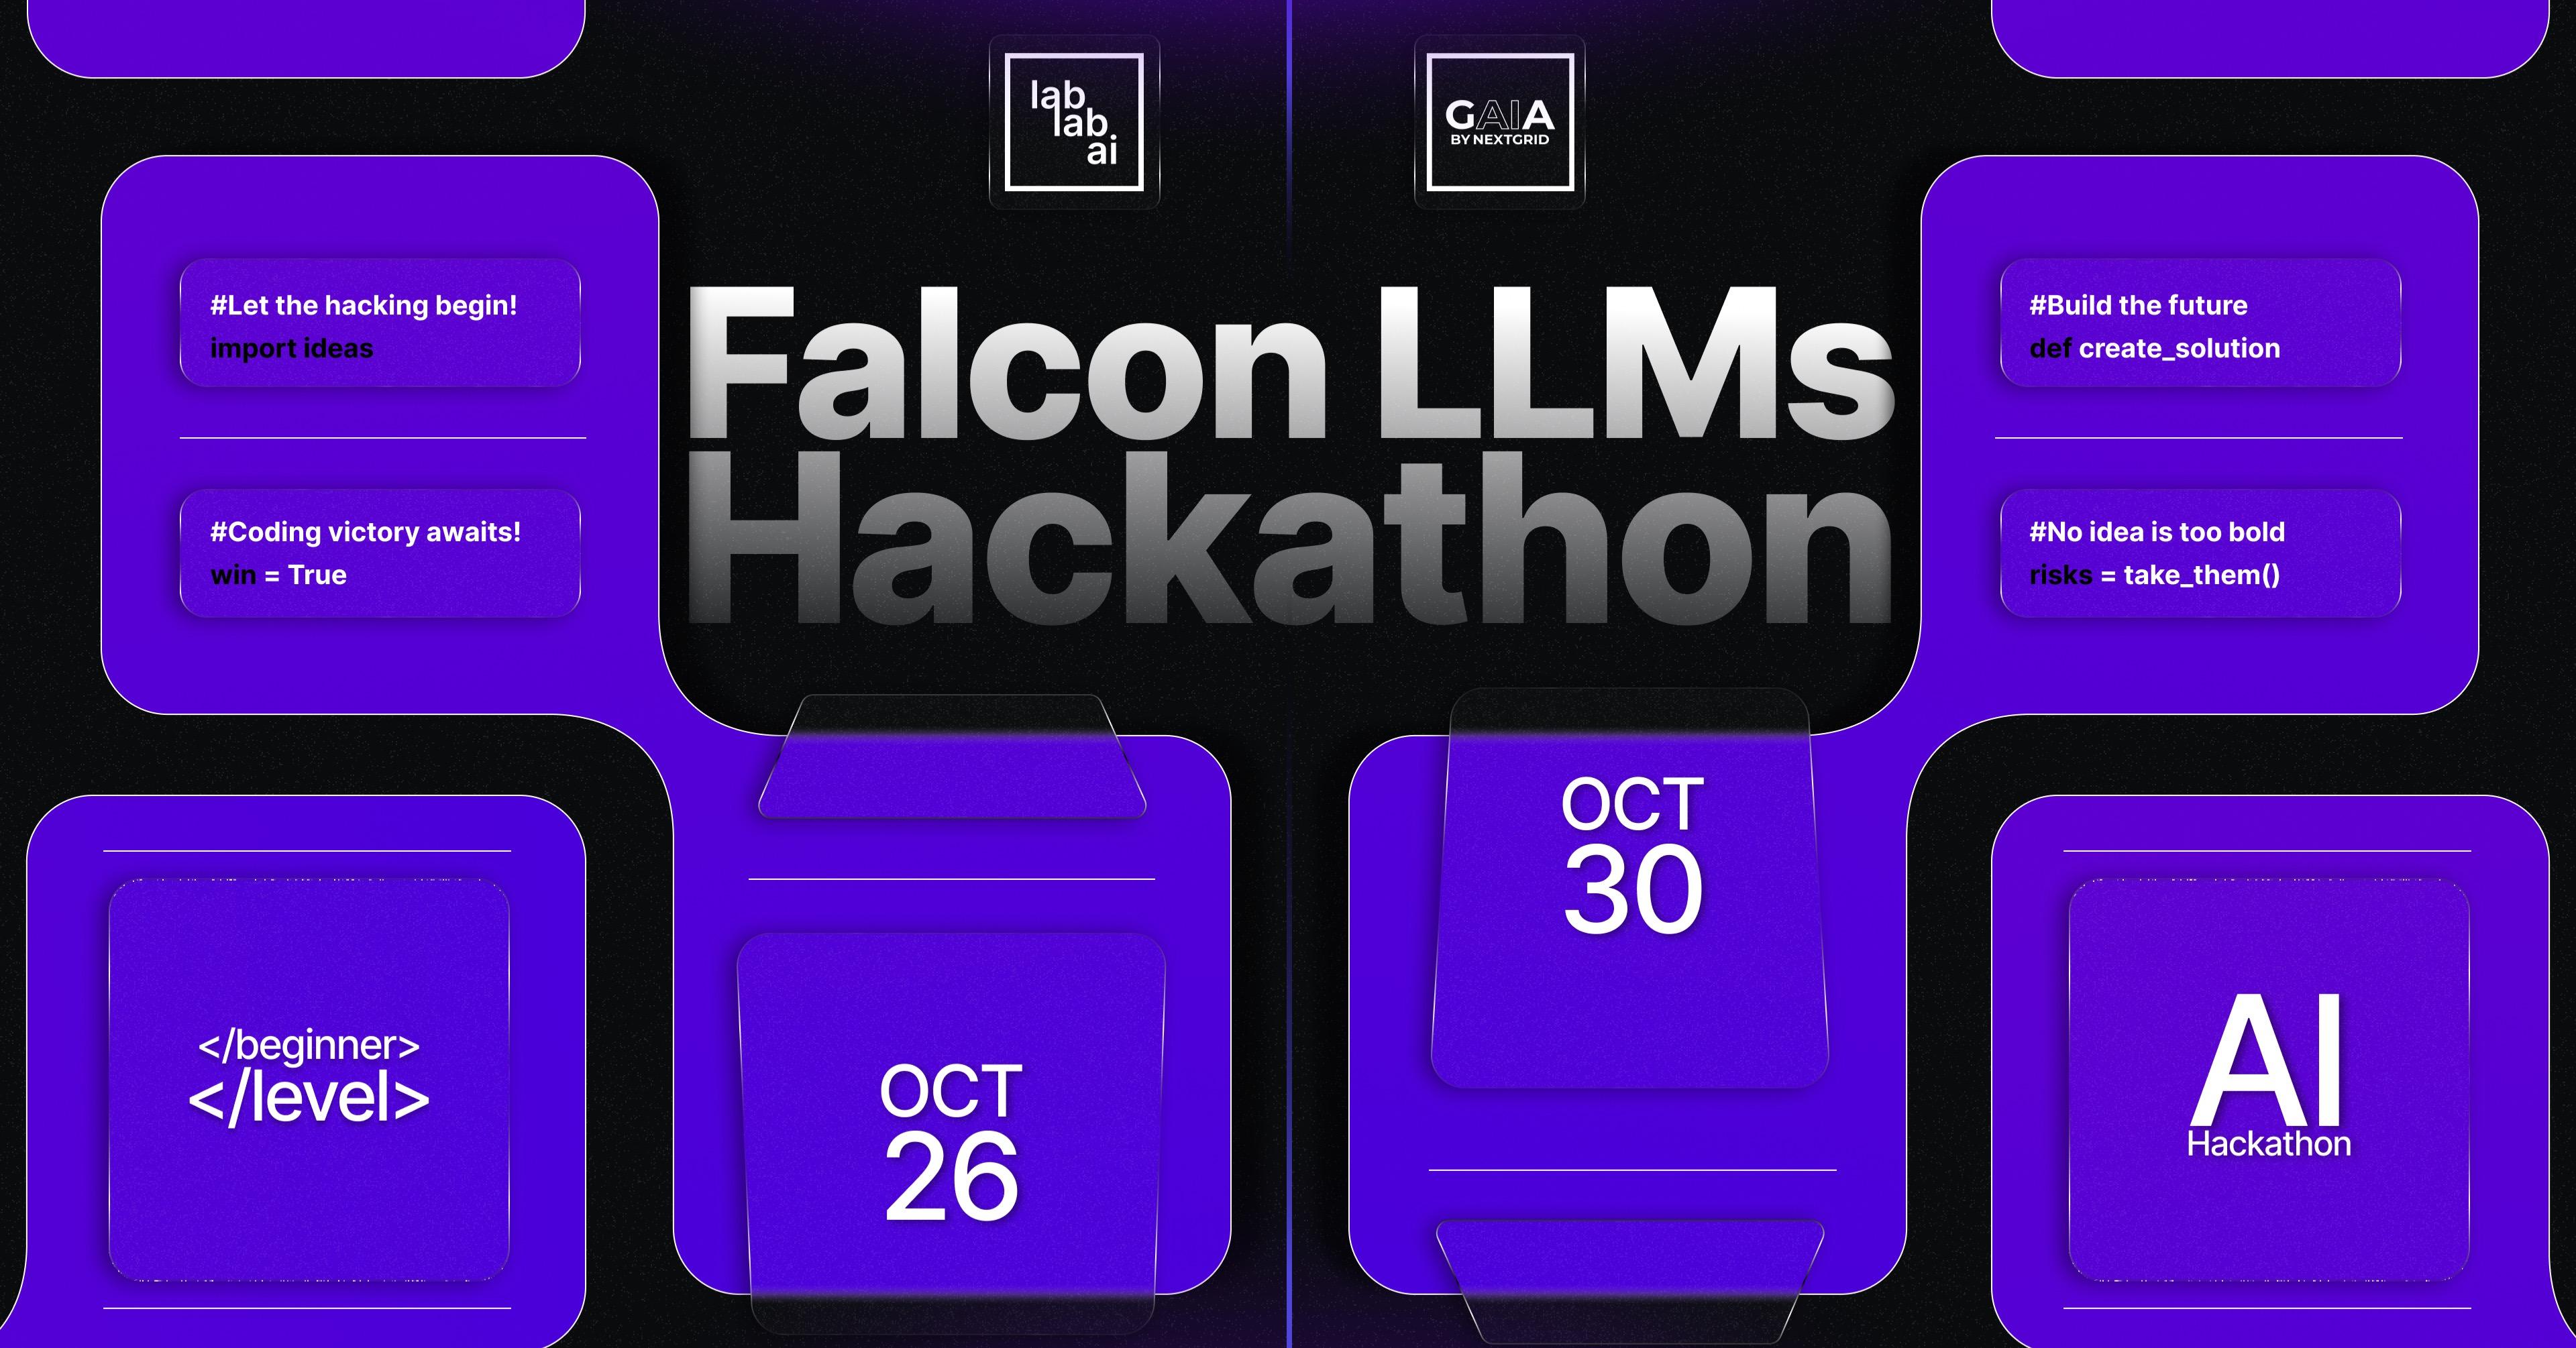 Falcon LLMs Hackathon sponsored by GAIA image